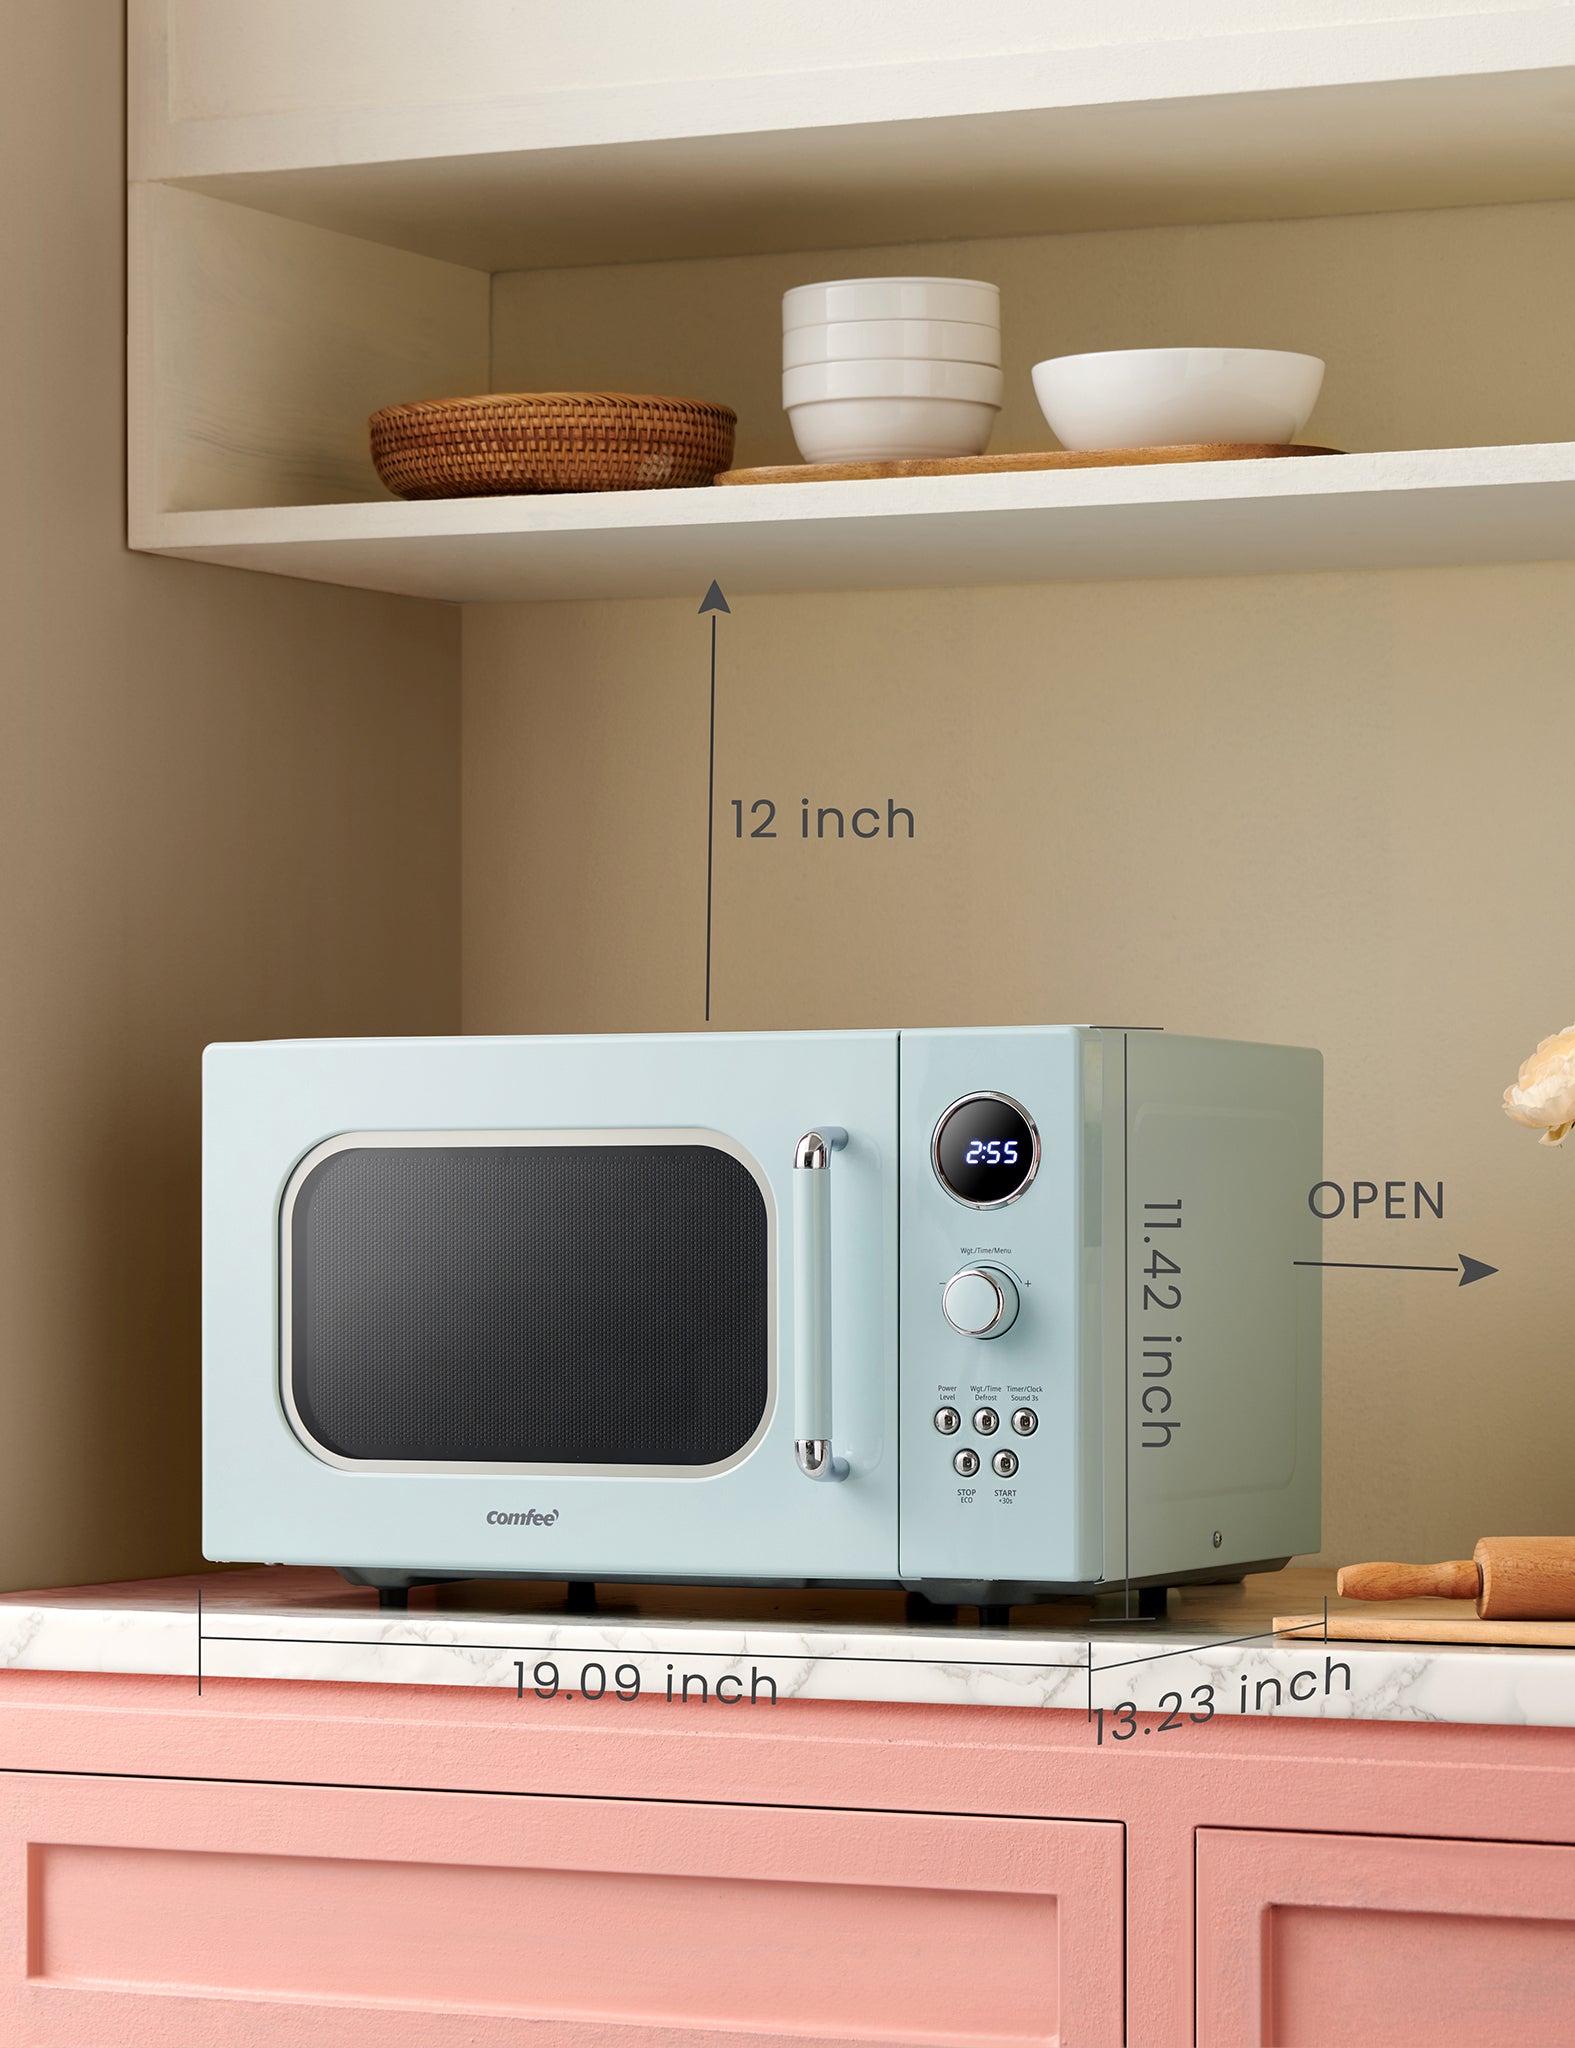 dimension of green retro microwave oven